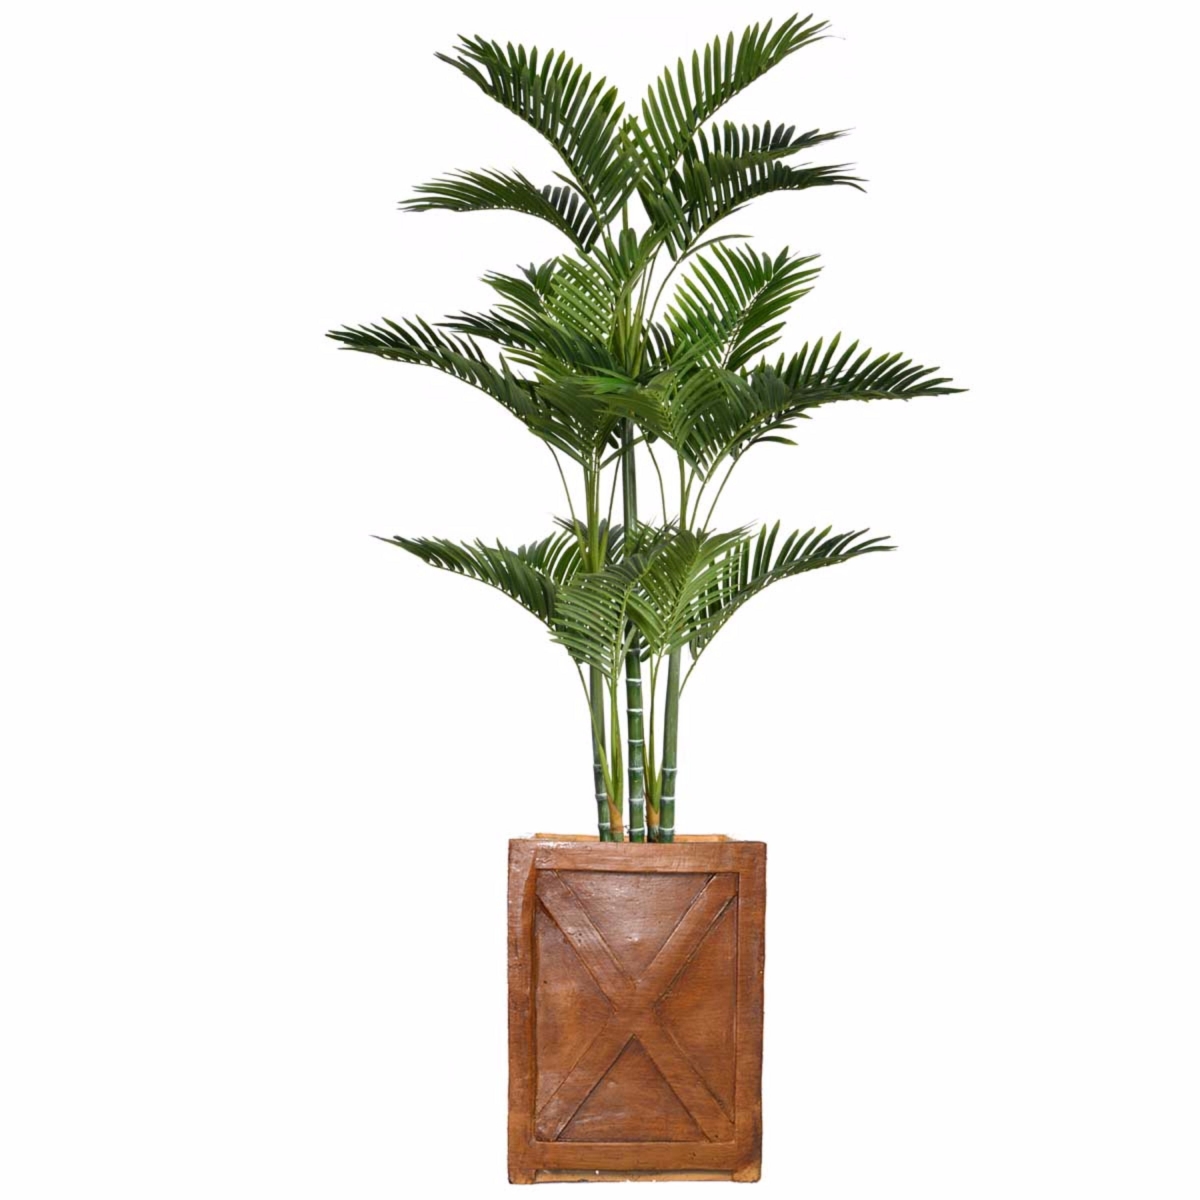 Vhx132207 69 In. Tall Palm Tree With Burlap Kit & Fiberstone Planter